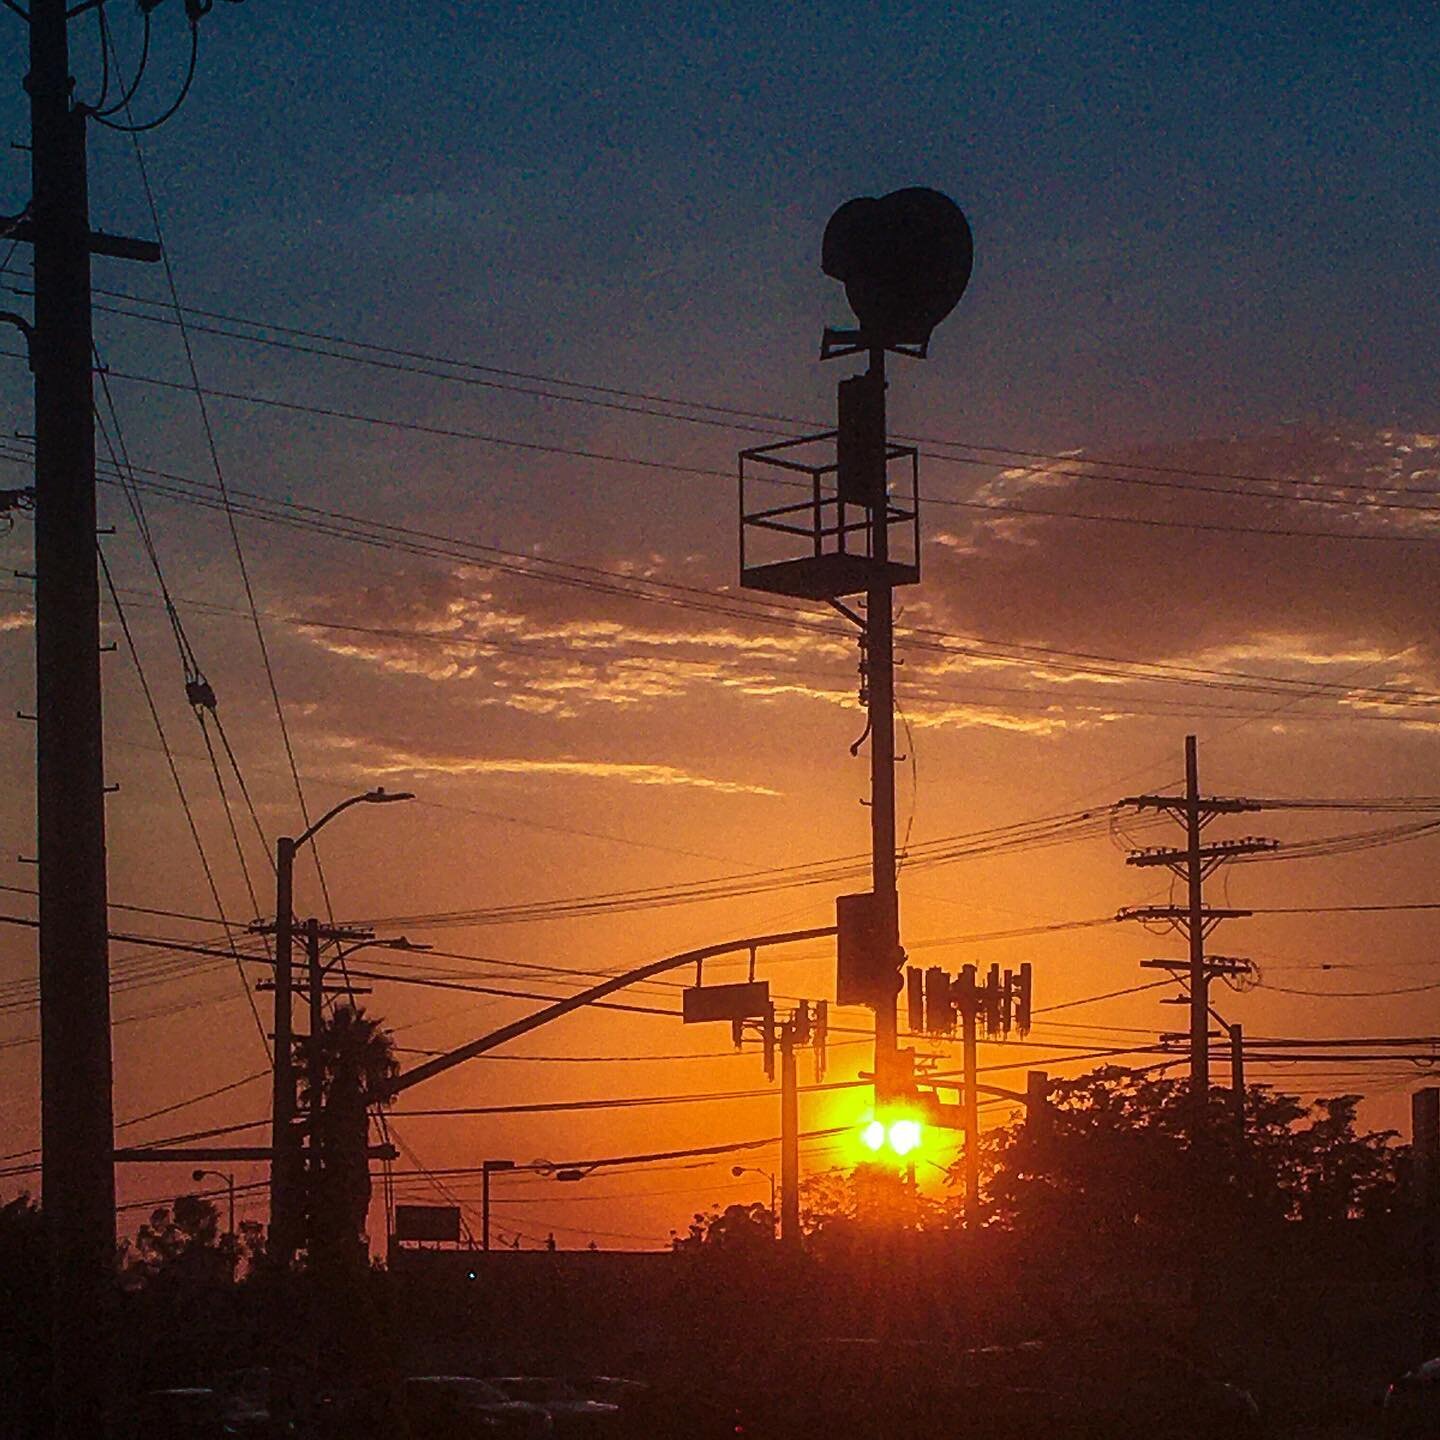 Doomsday siren, Pacoima Sunset. 

#sanfernadovalley #doomsday #duckandcover #losangeles #sunset #silhouette